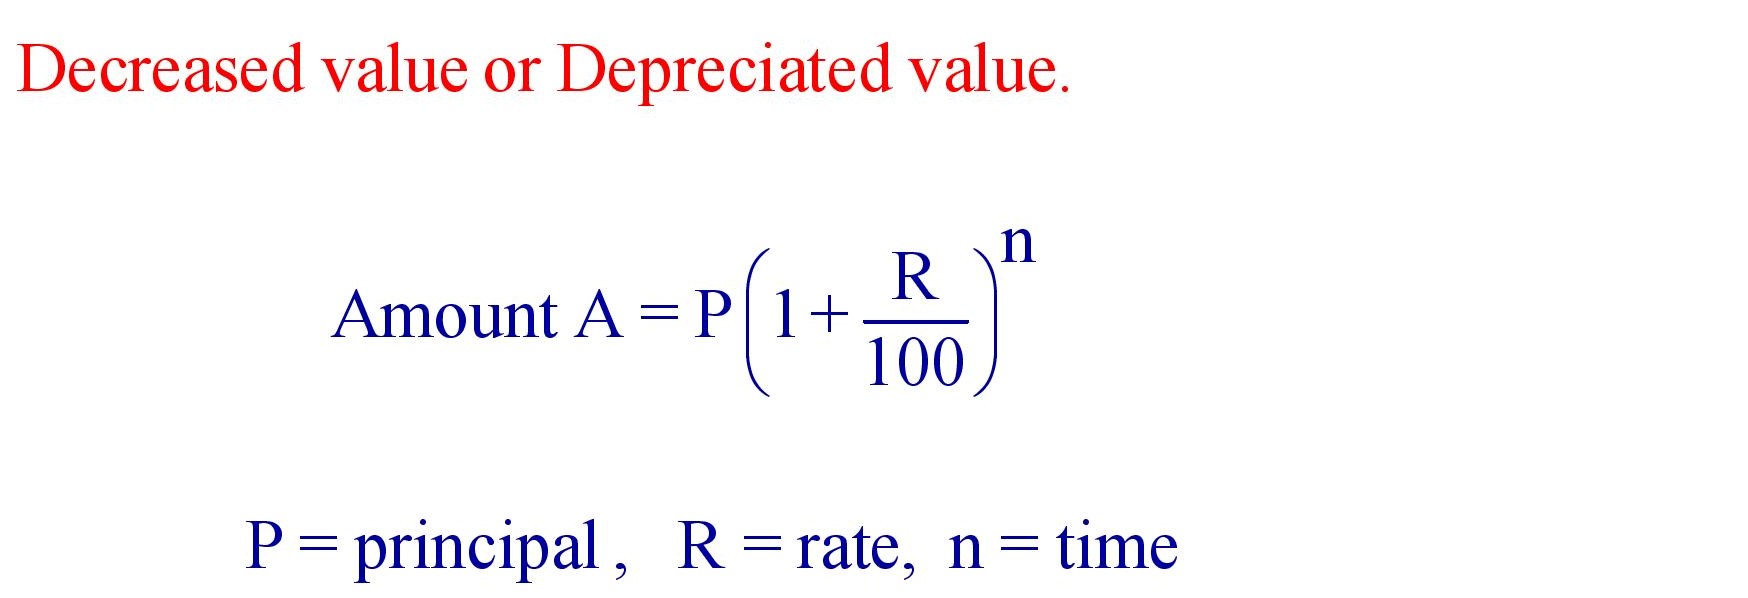 Decreased Value or Depreciated Value